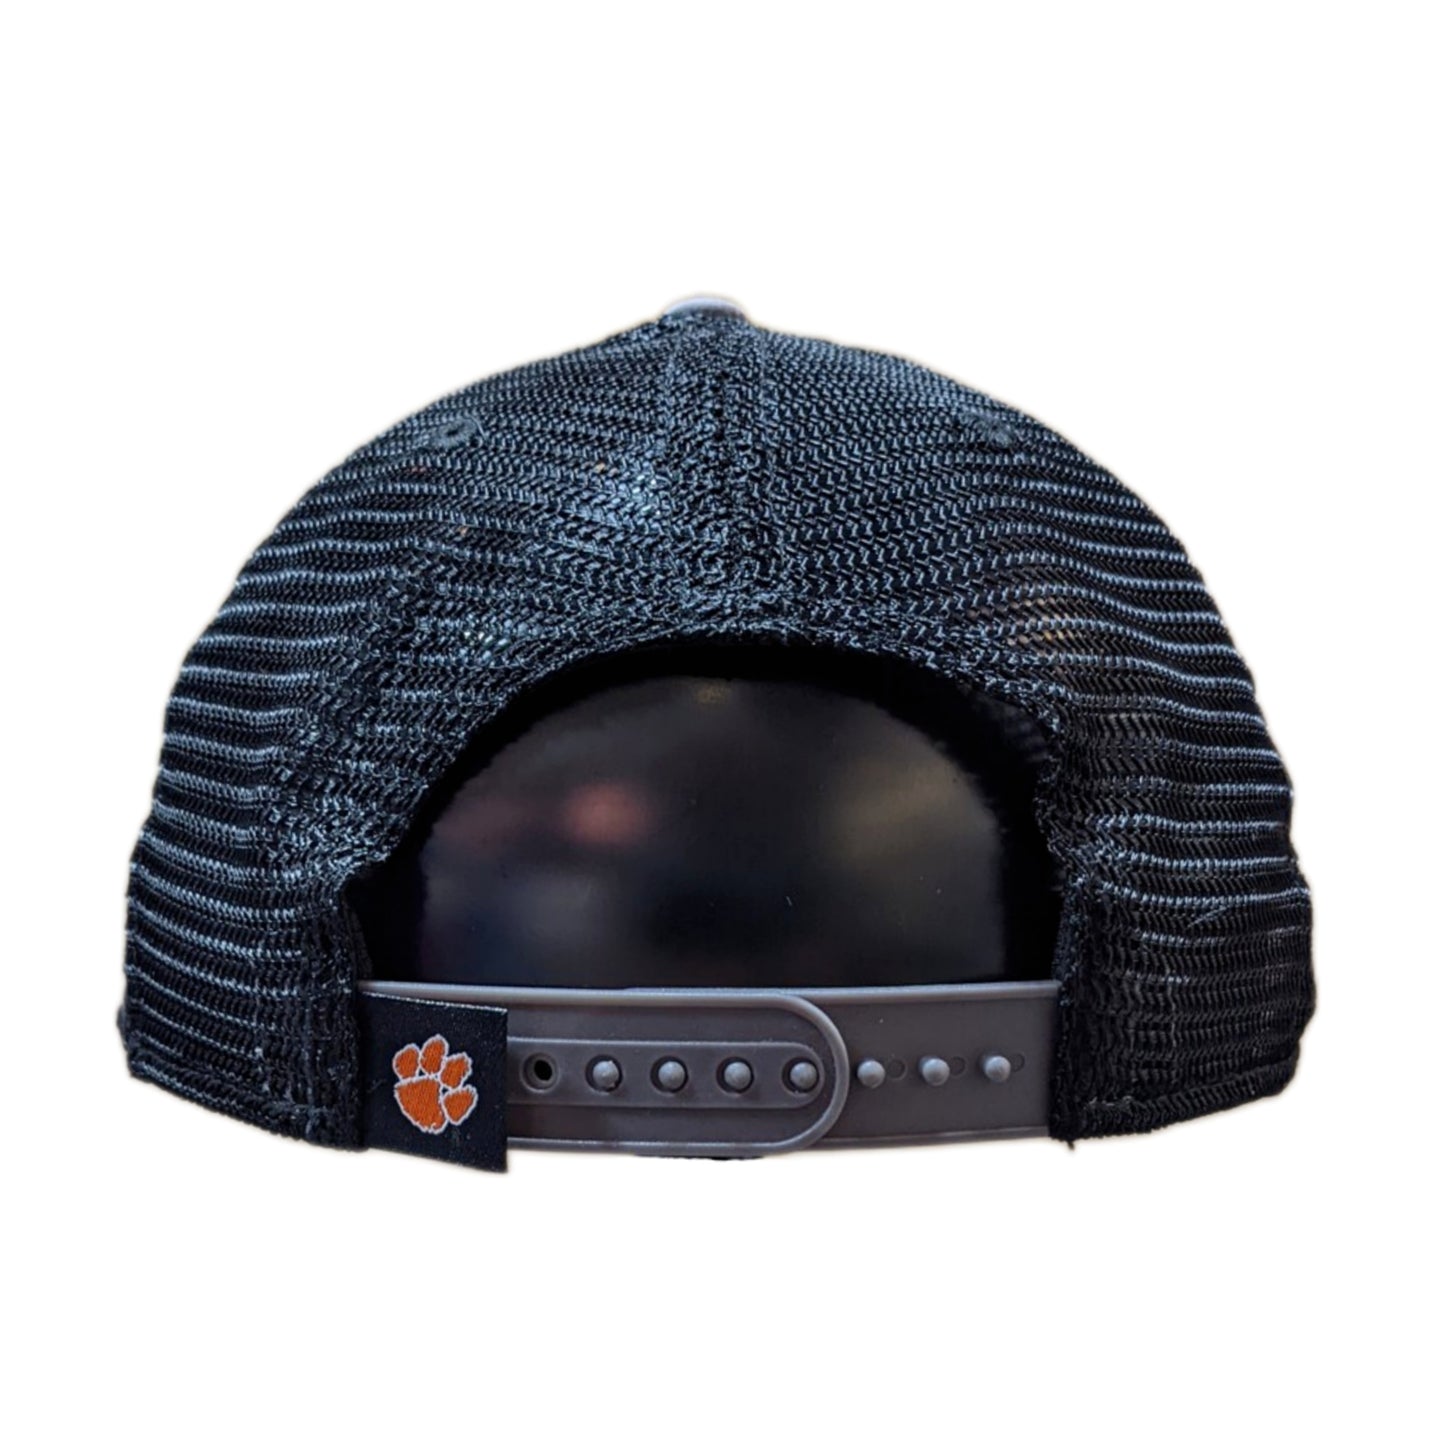 Clemson Tigers Top of the World Gray/Black Trucker Adjustable Snapback Hat